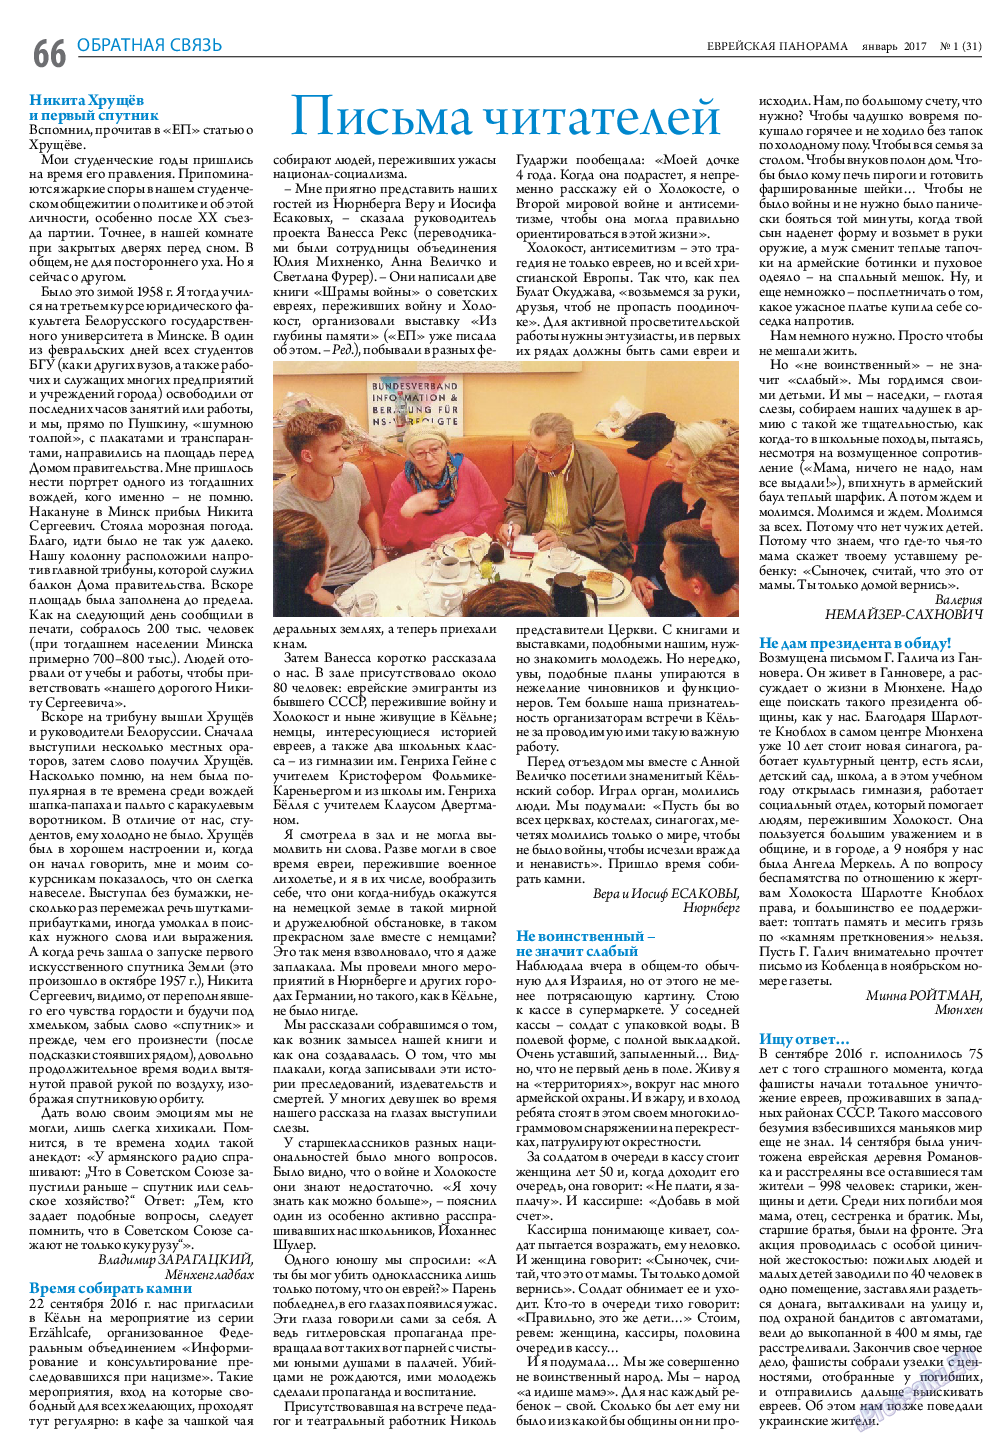 Еврейская панорама, газета. 2017 №1 стр.66